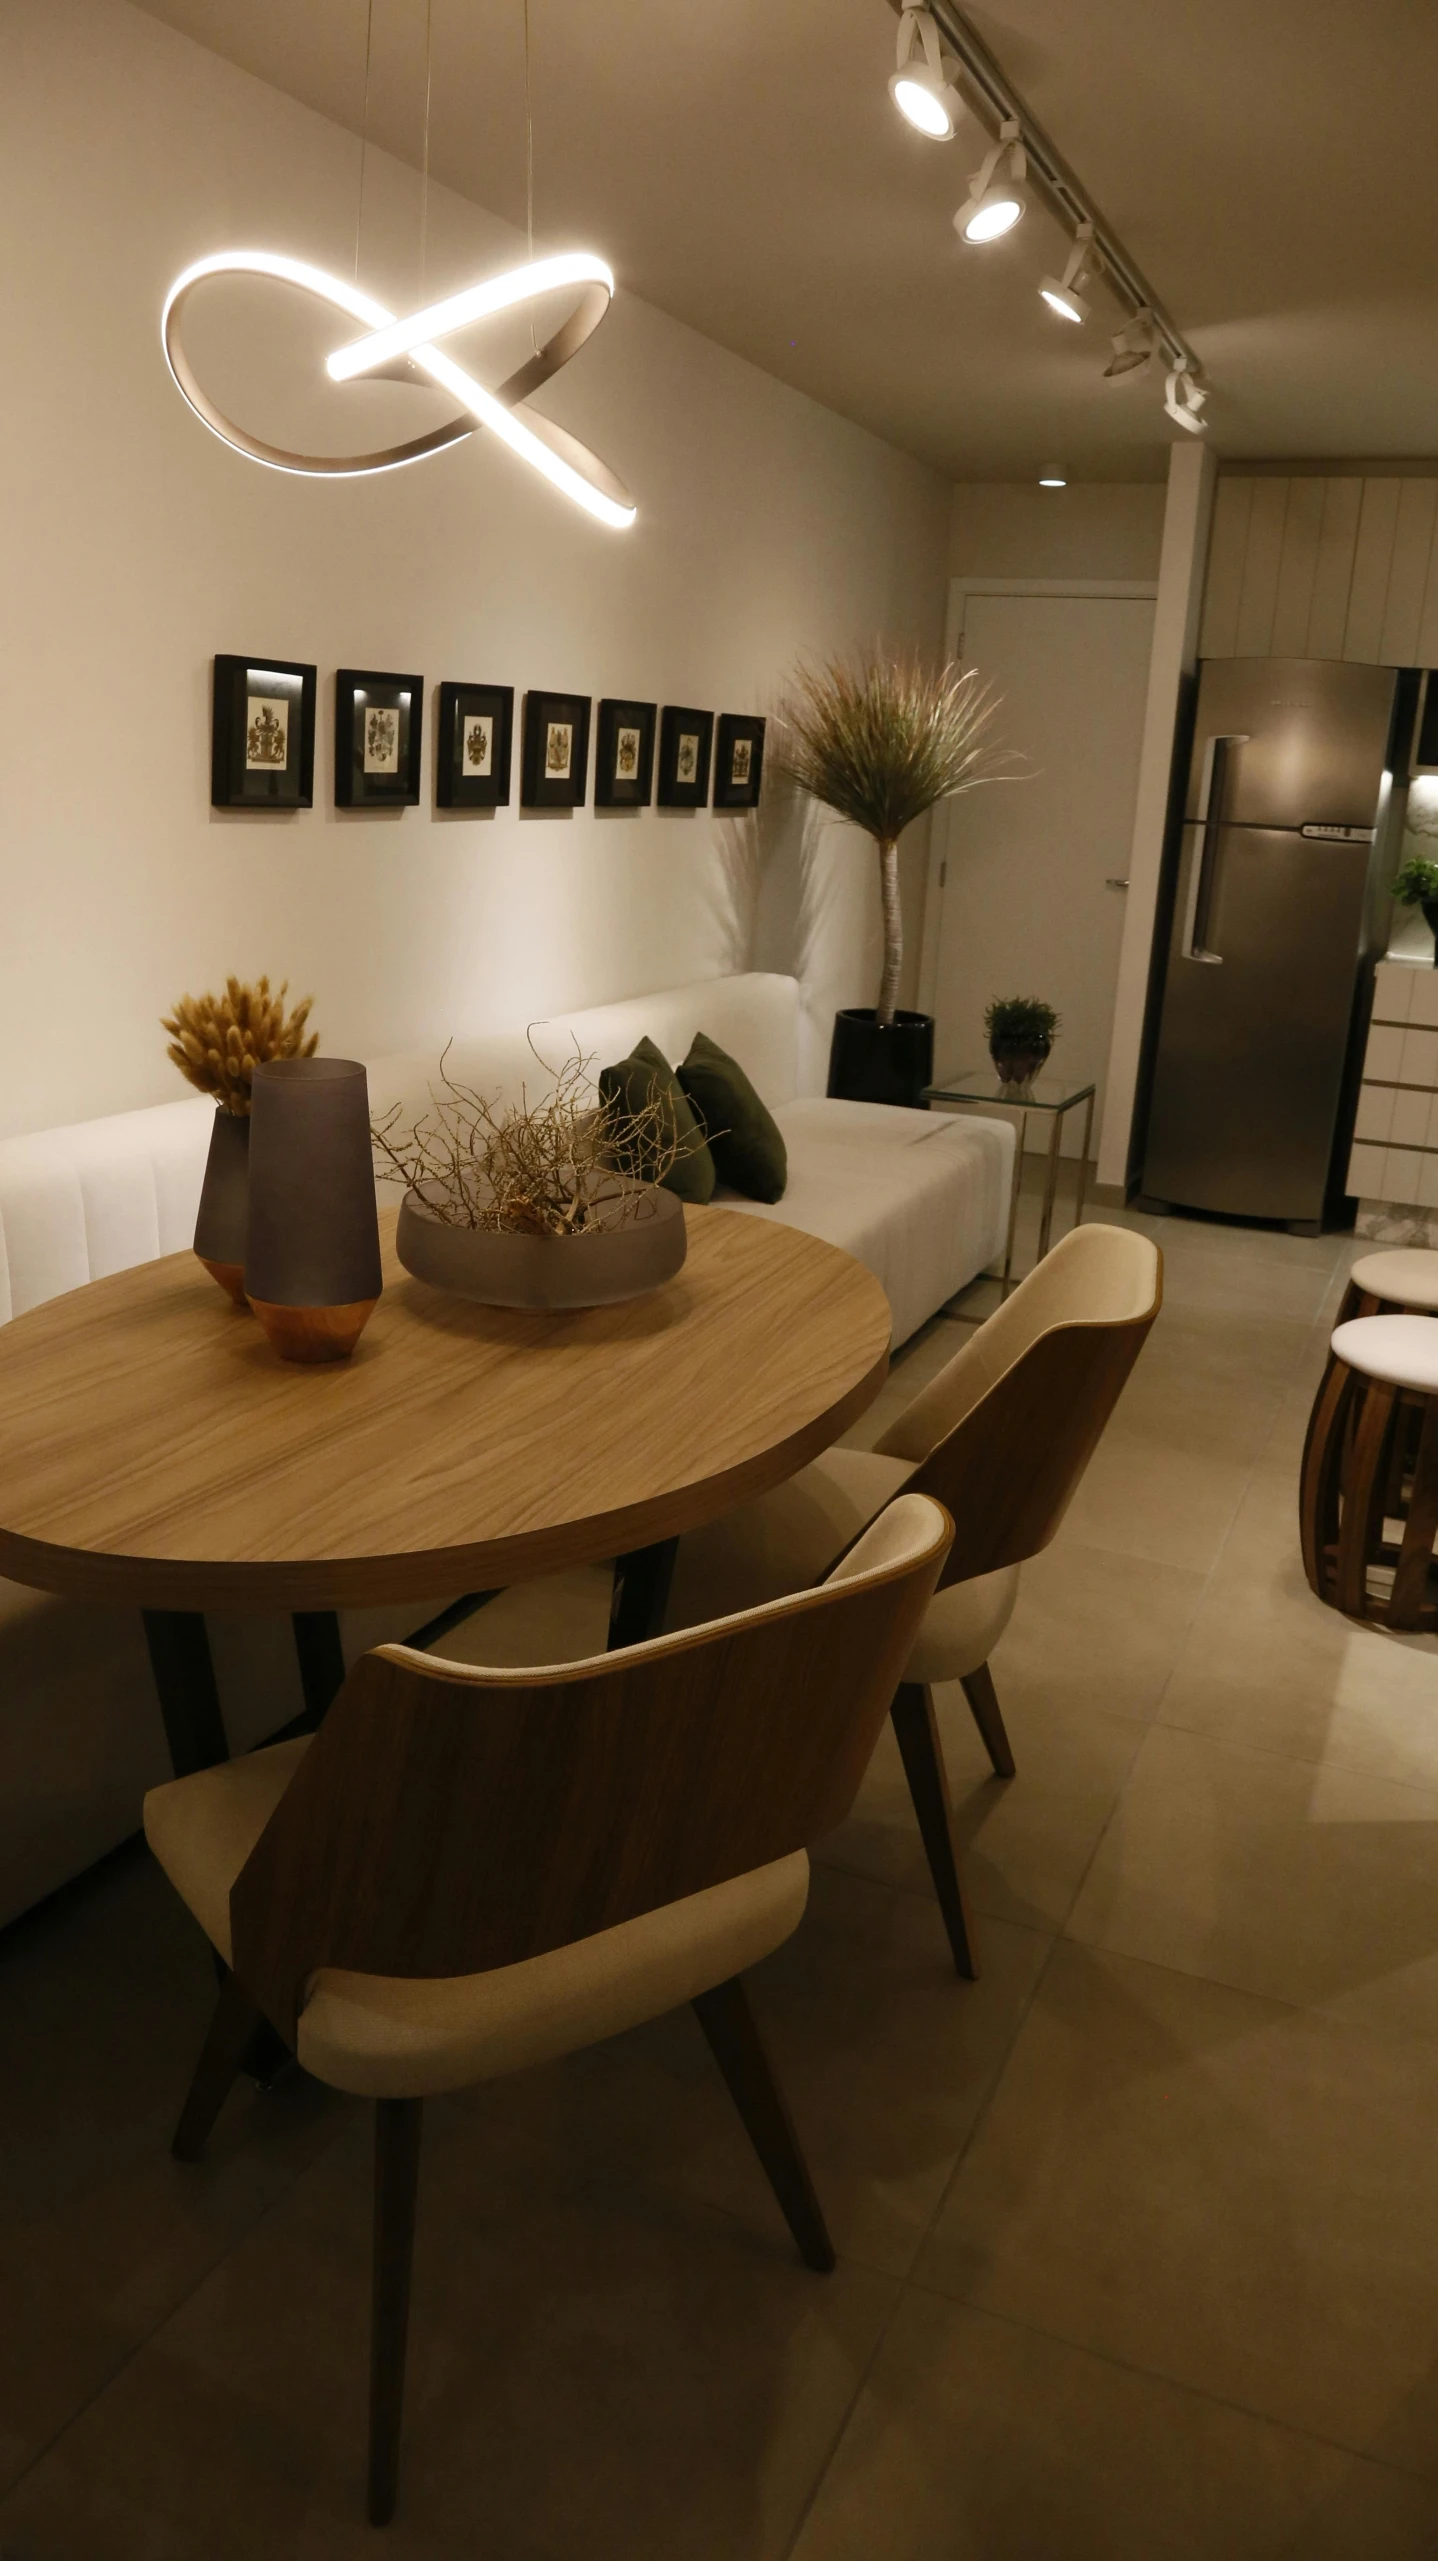 a nice, modern looking room is shown